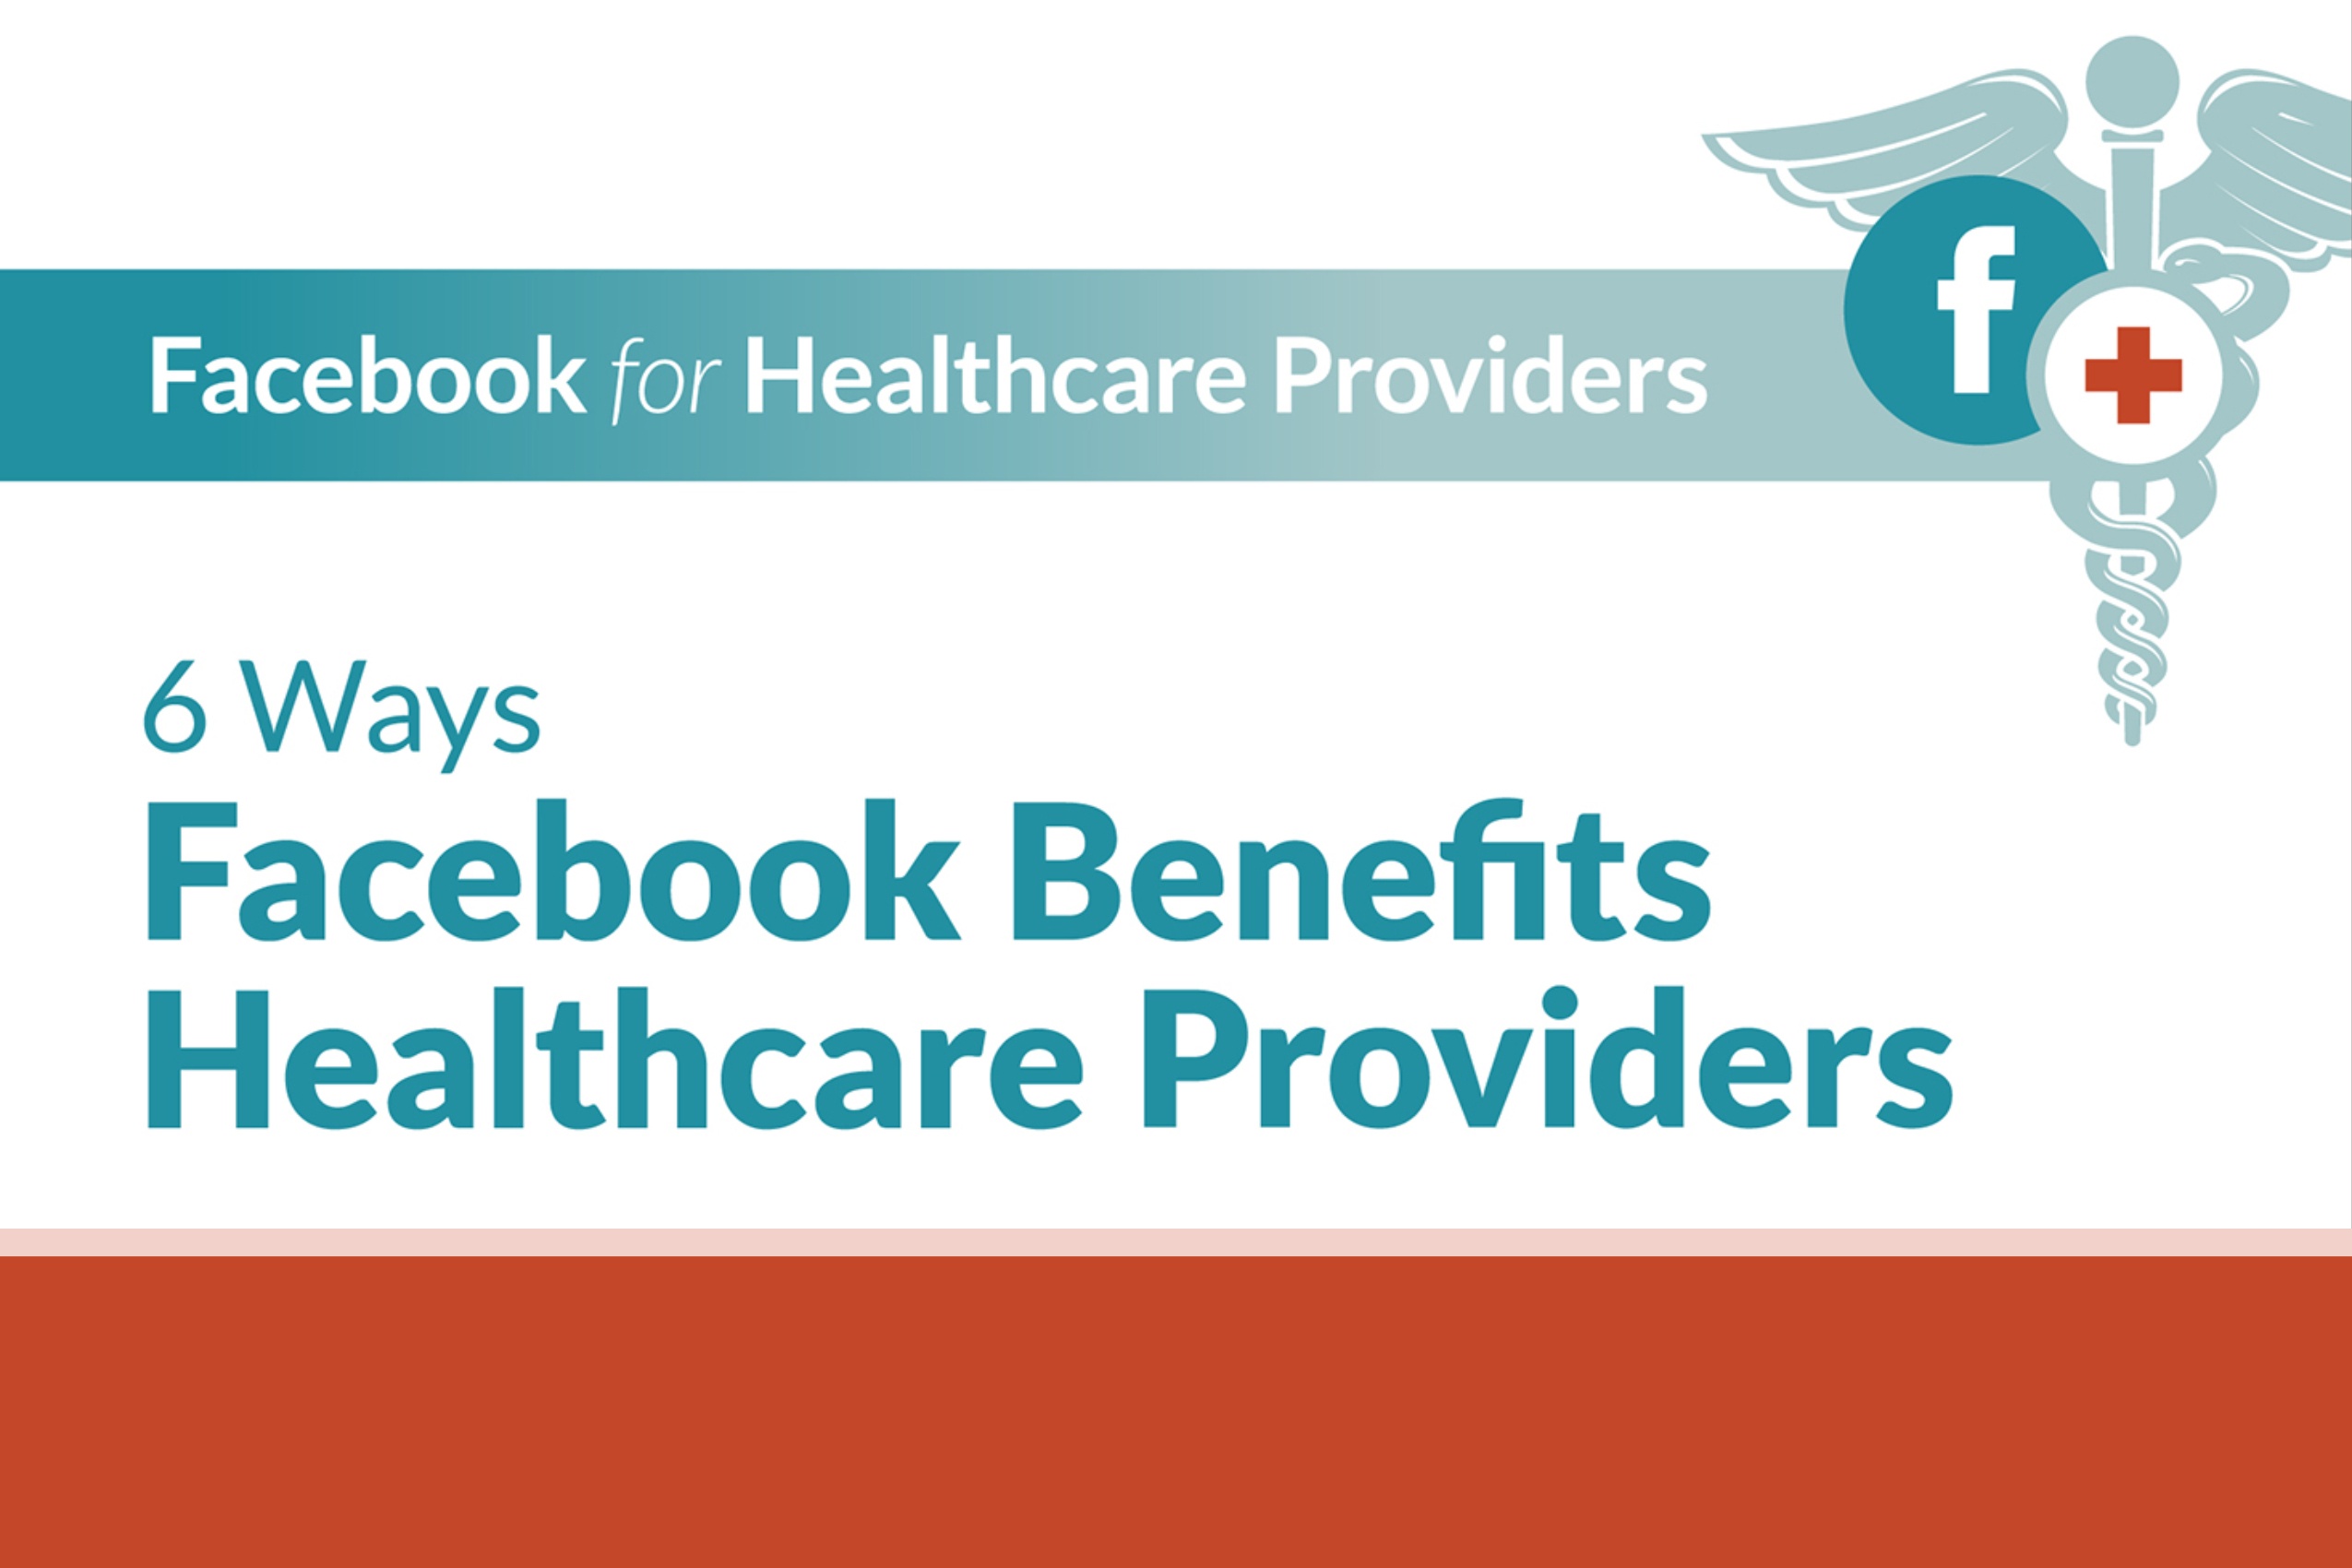 6 Ways Facebook Benefits Healthcare Providers (infographic)